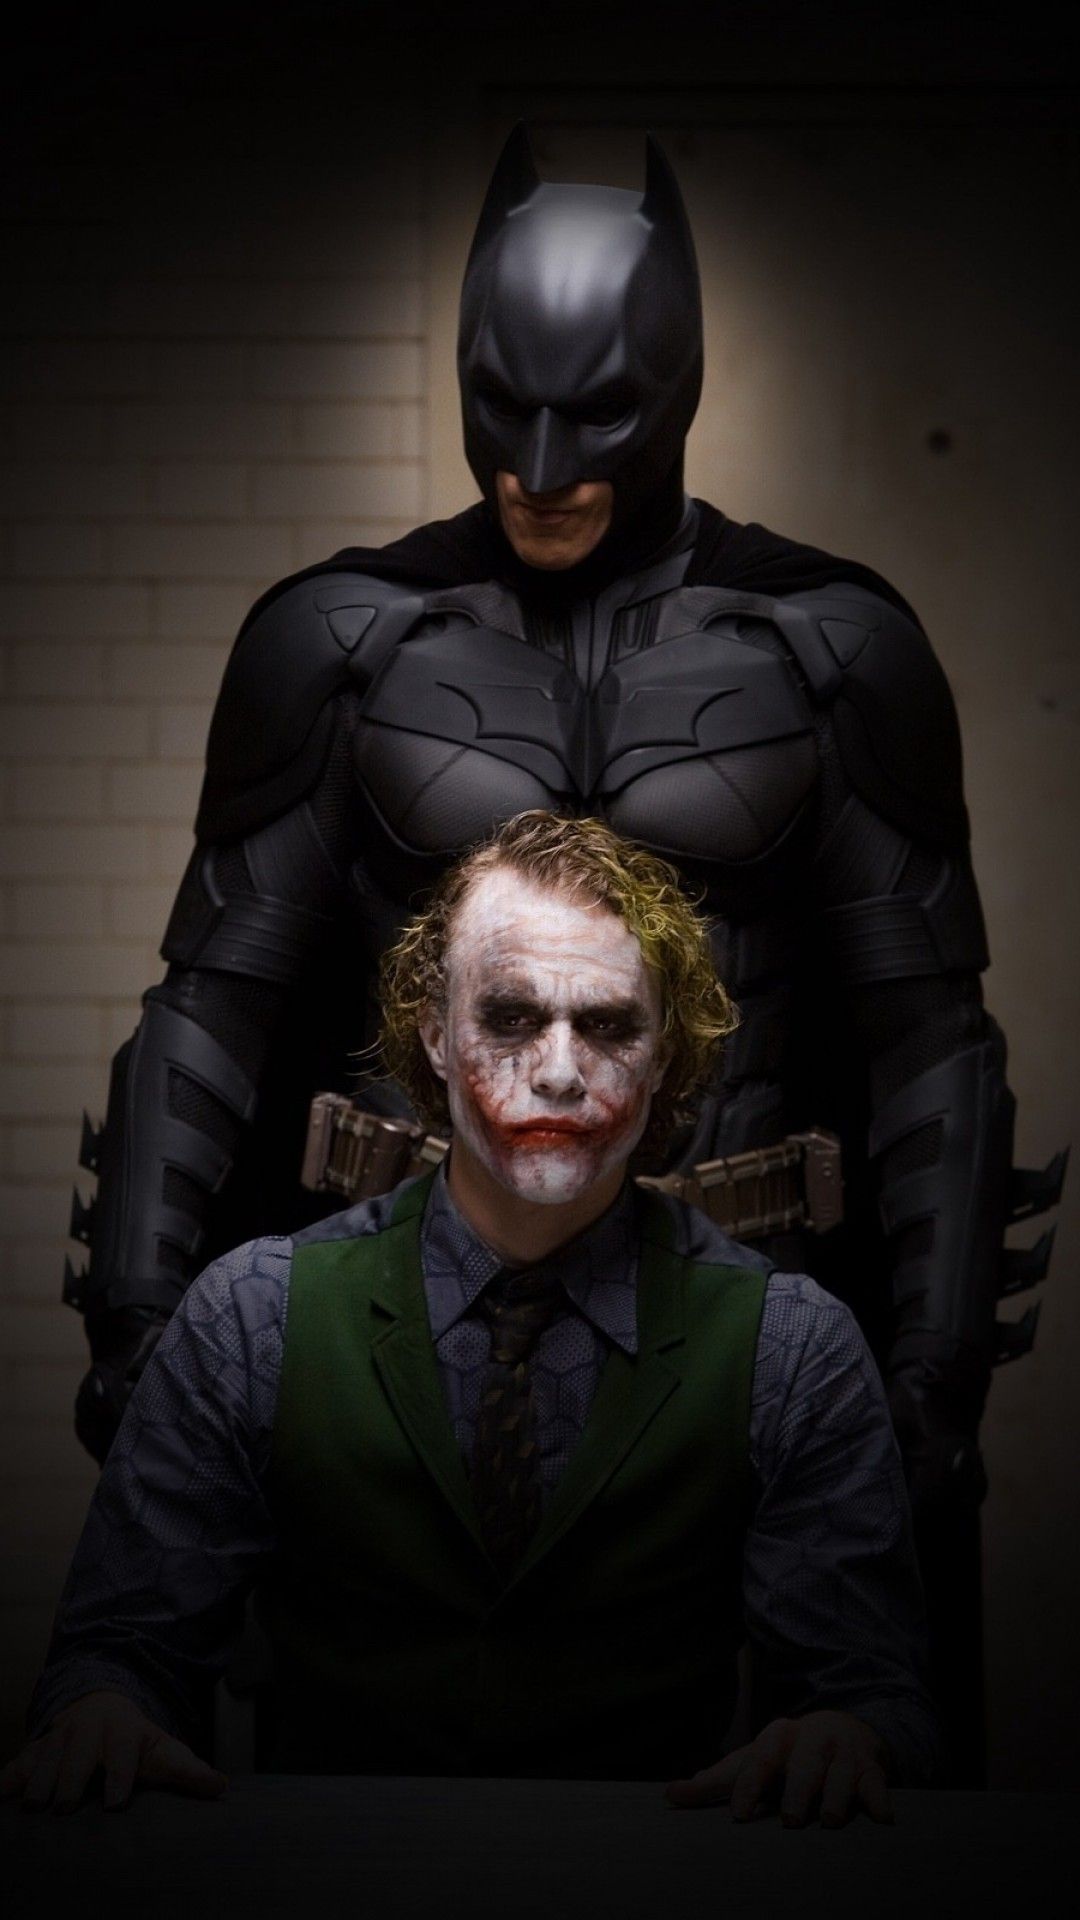 Batman vs Joker iPhone Wallpaper  iPhone Wallpapers